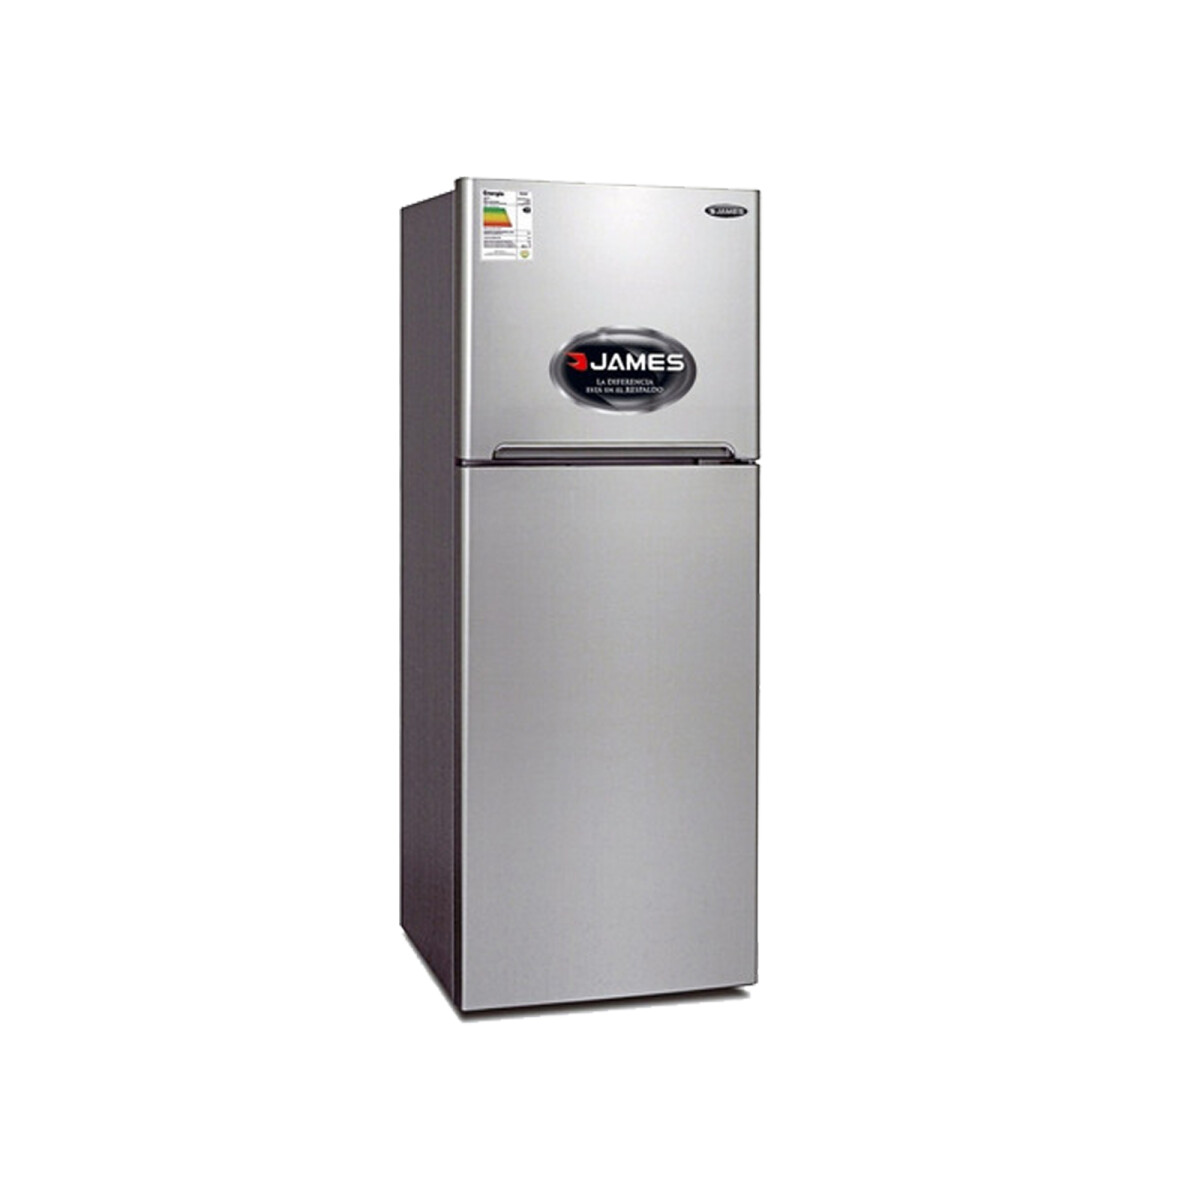 Refrigerador James Jn 300 Inox (j300 